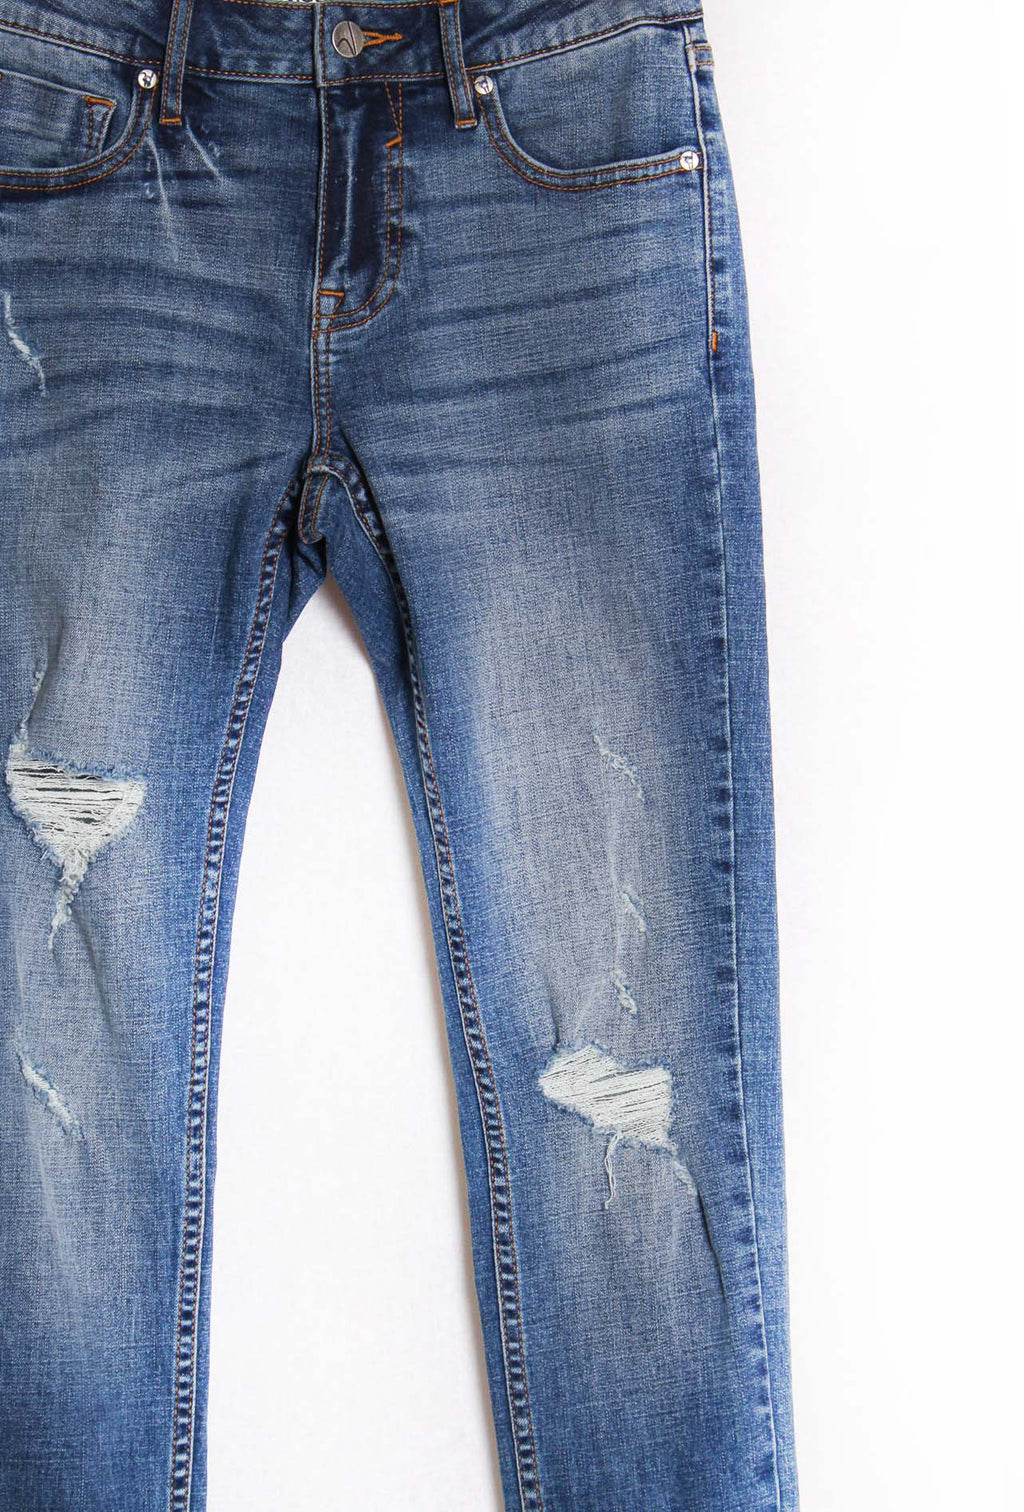 Women's High Waisted Tattered Folded Skinny Jeans